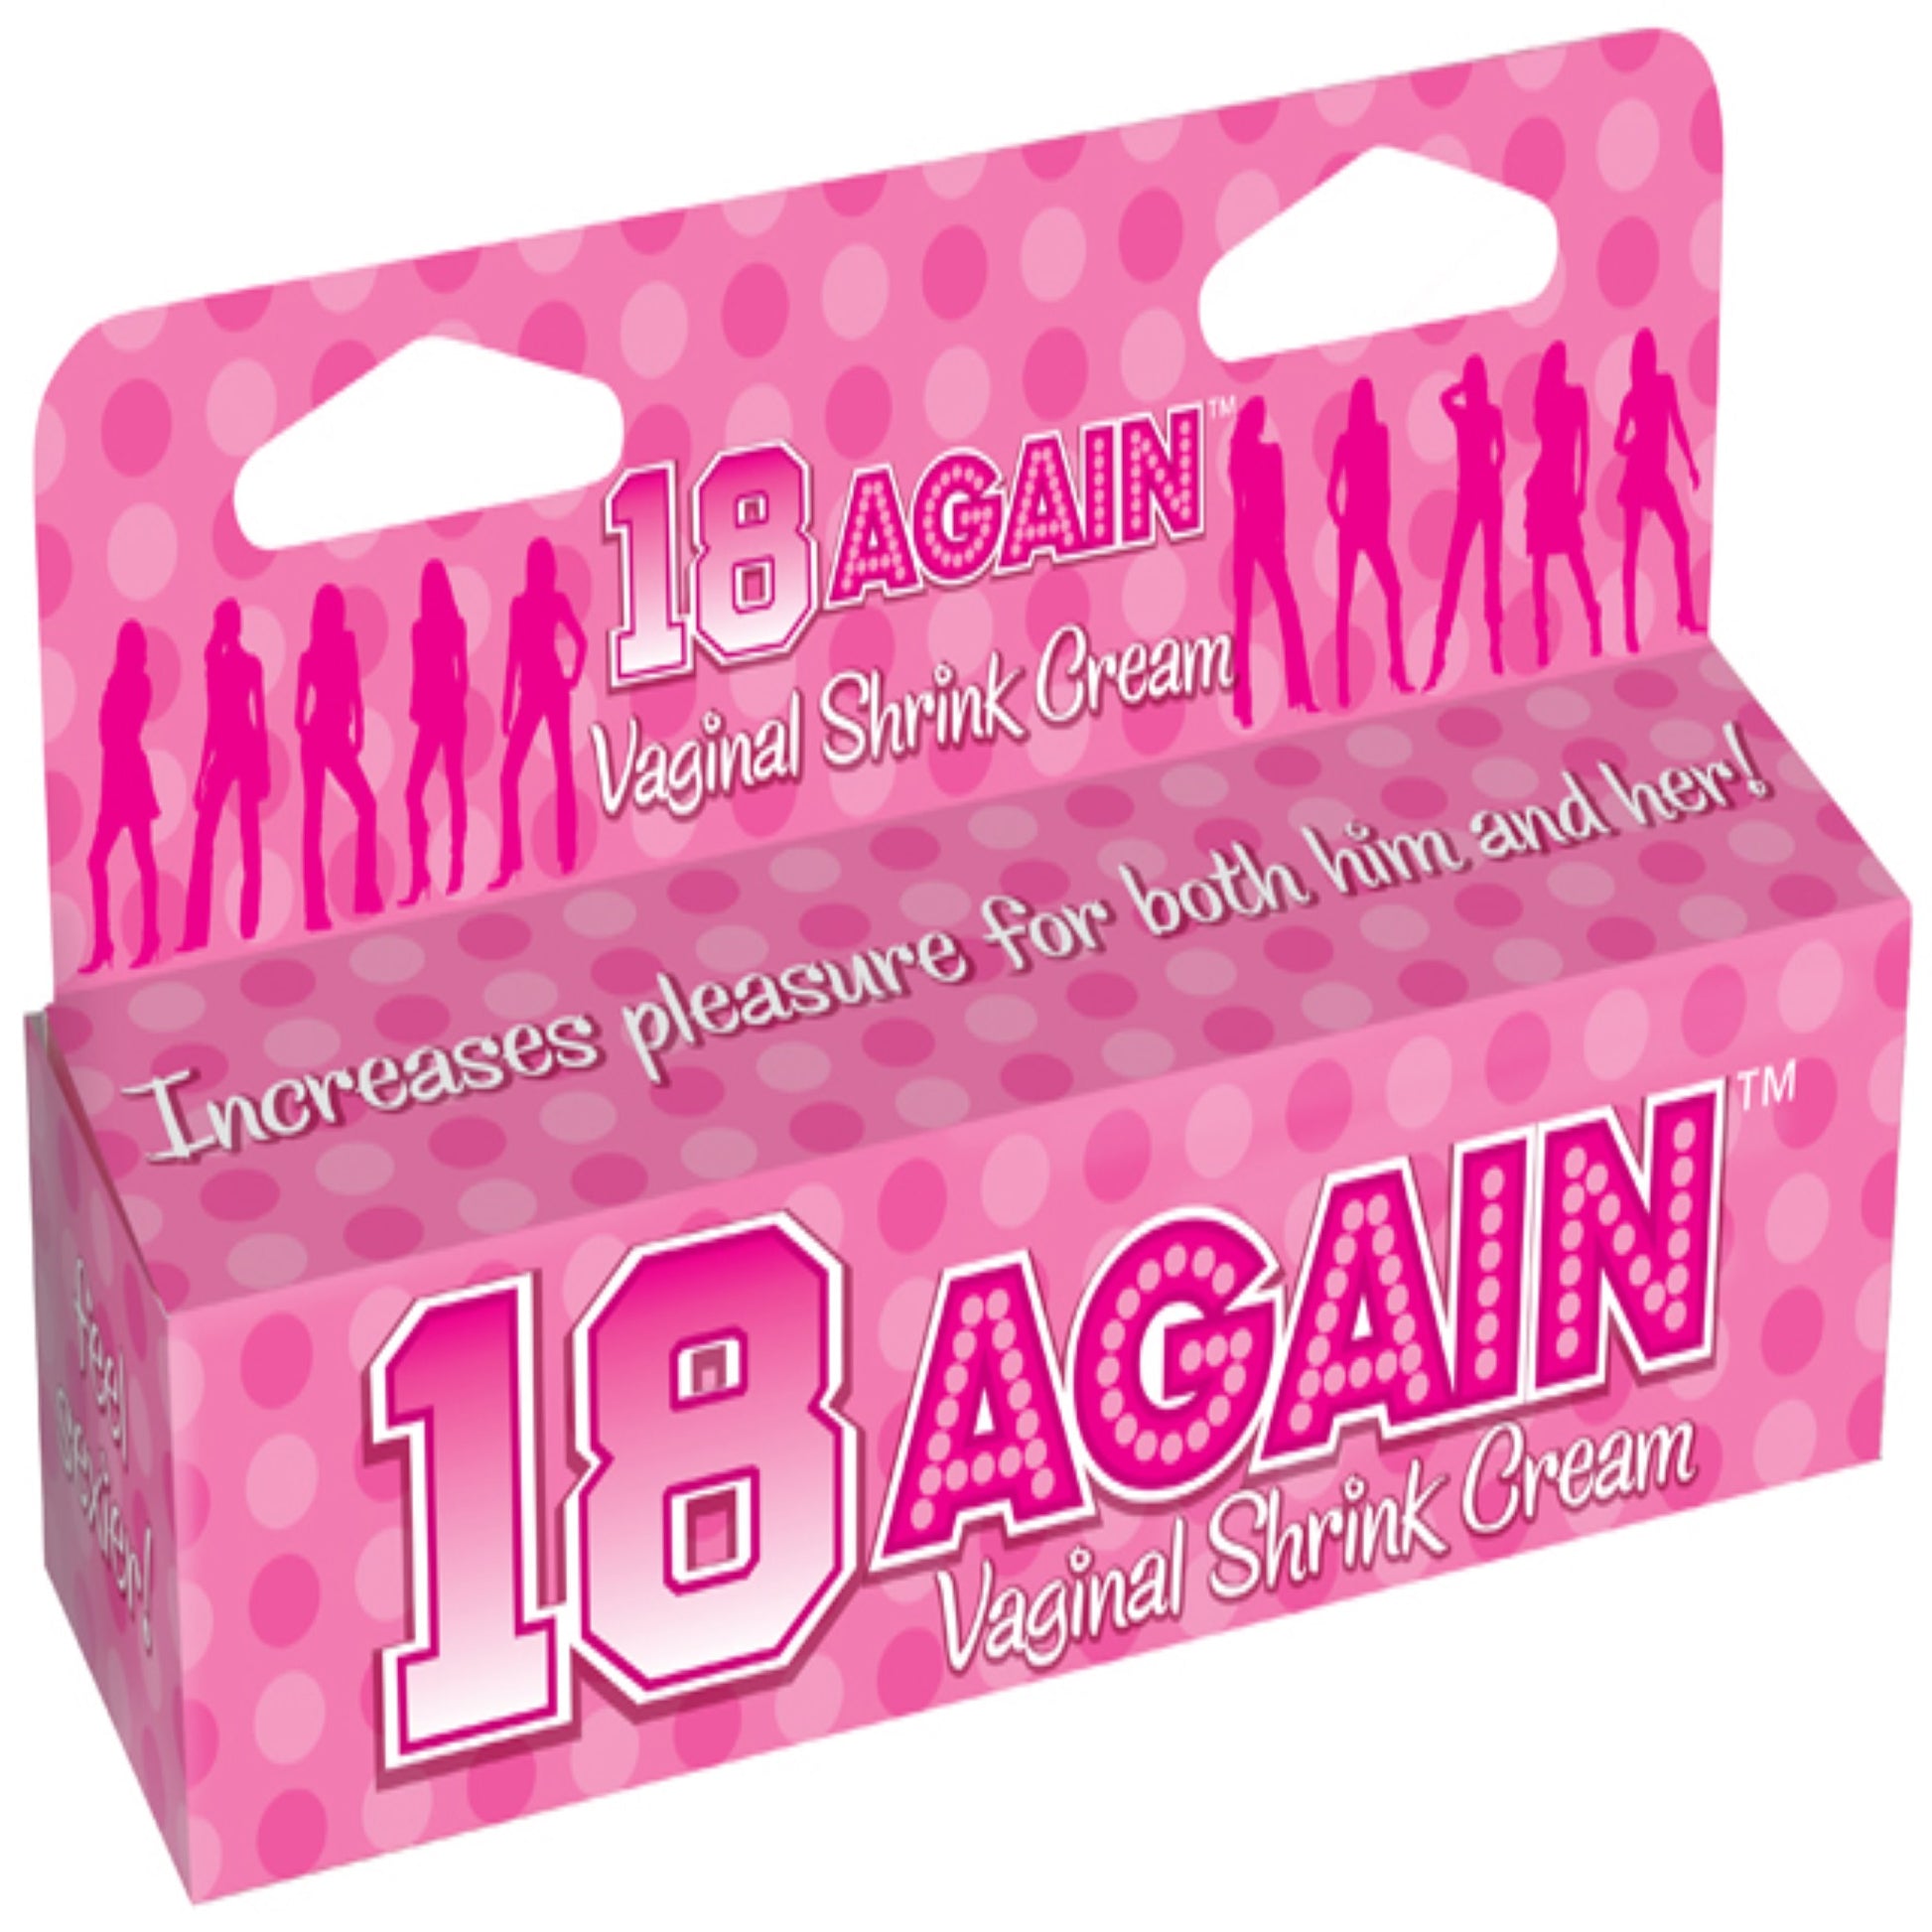 18-again-vaginal-shrink-cream